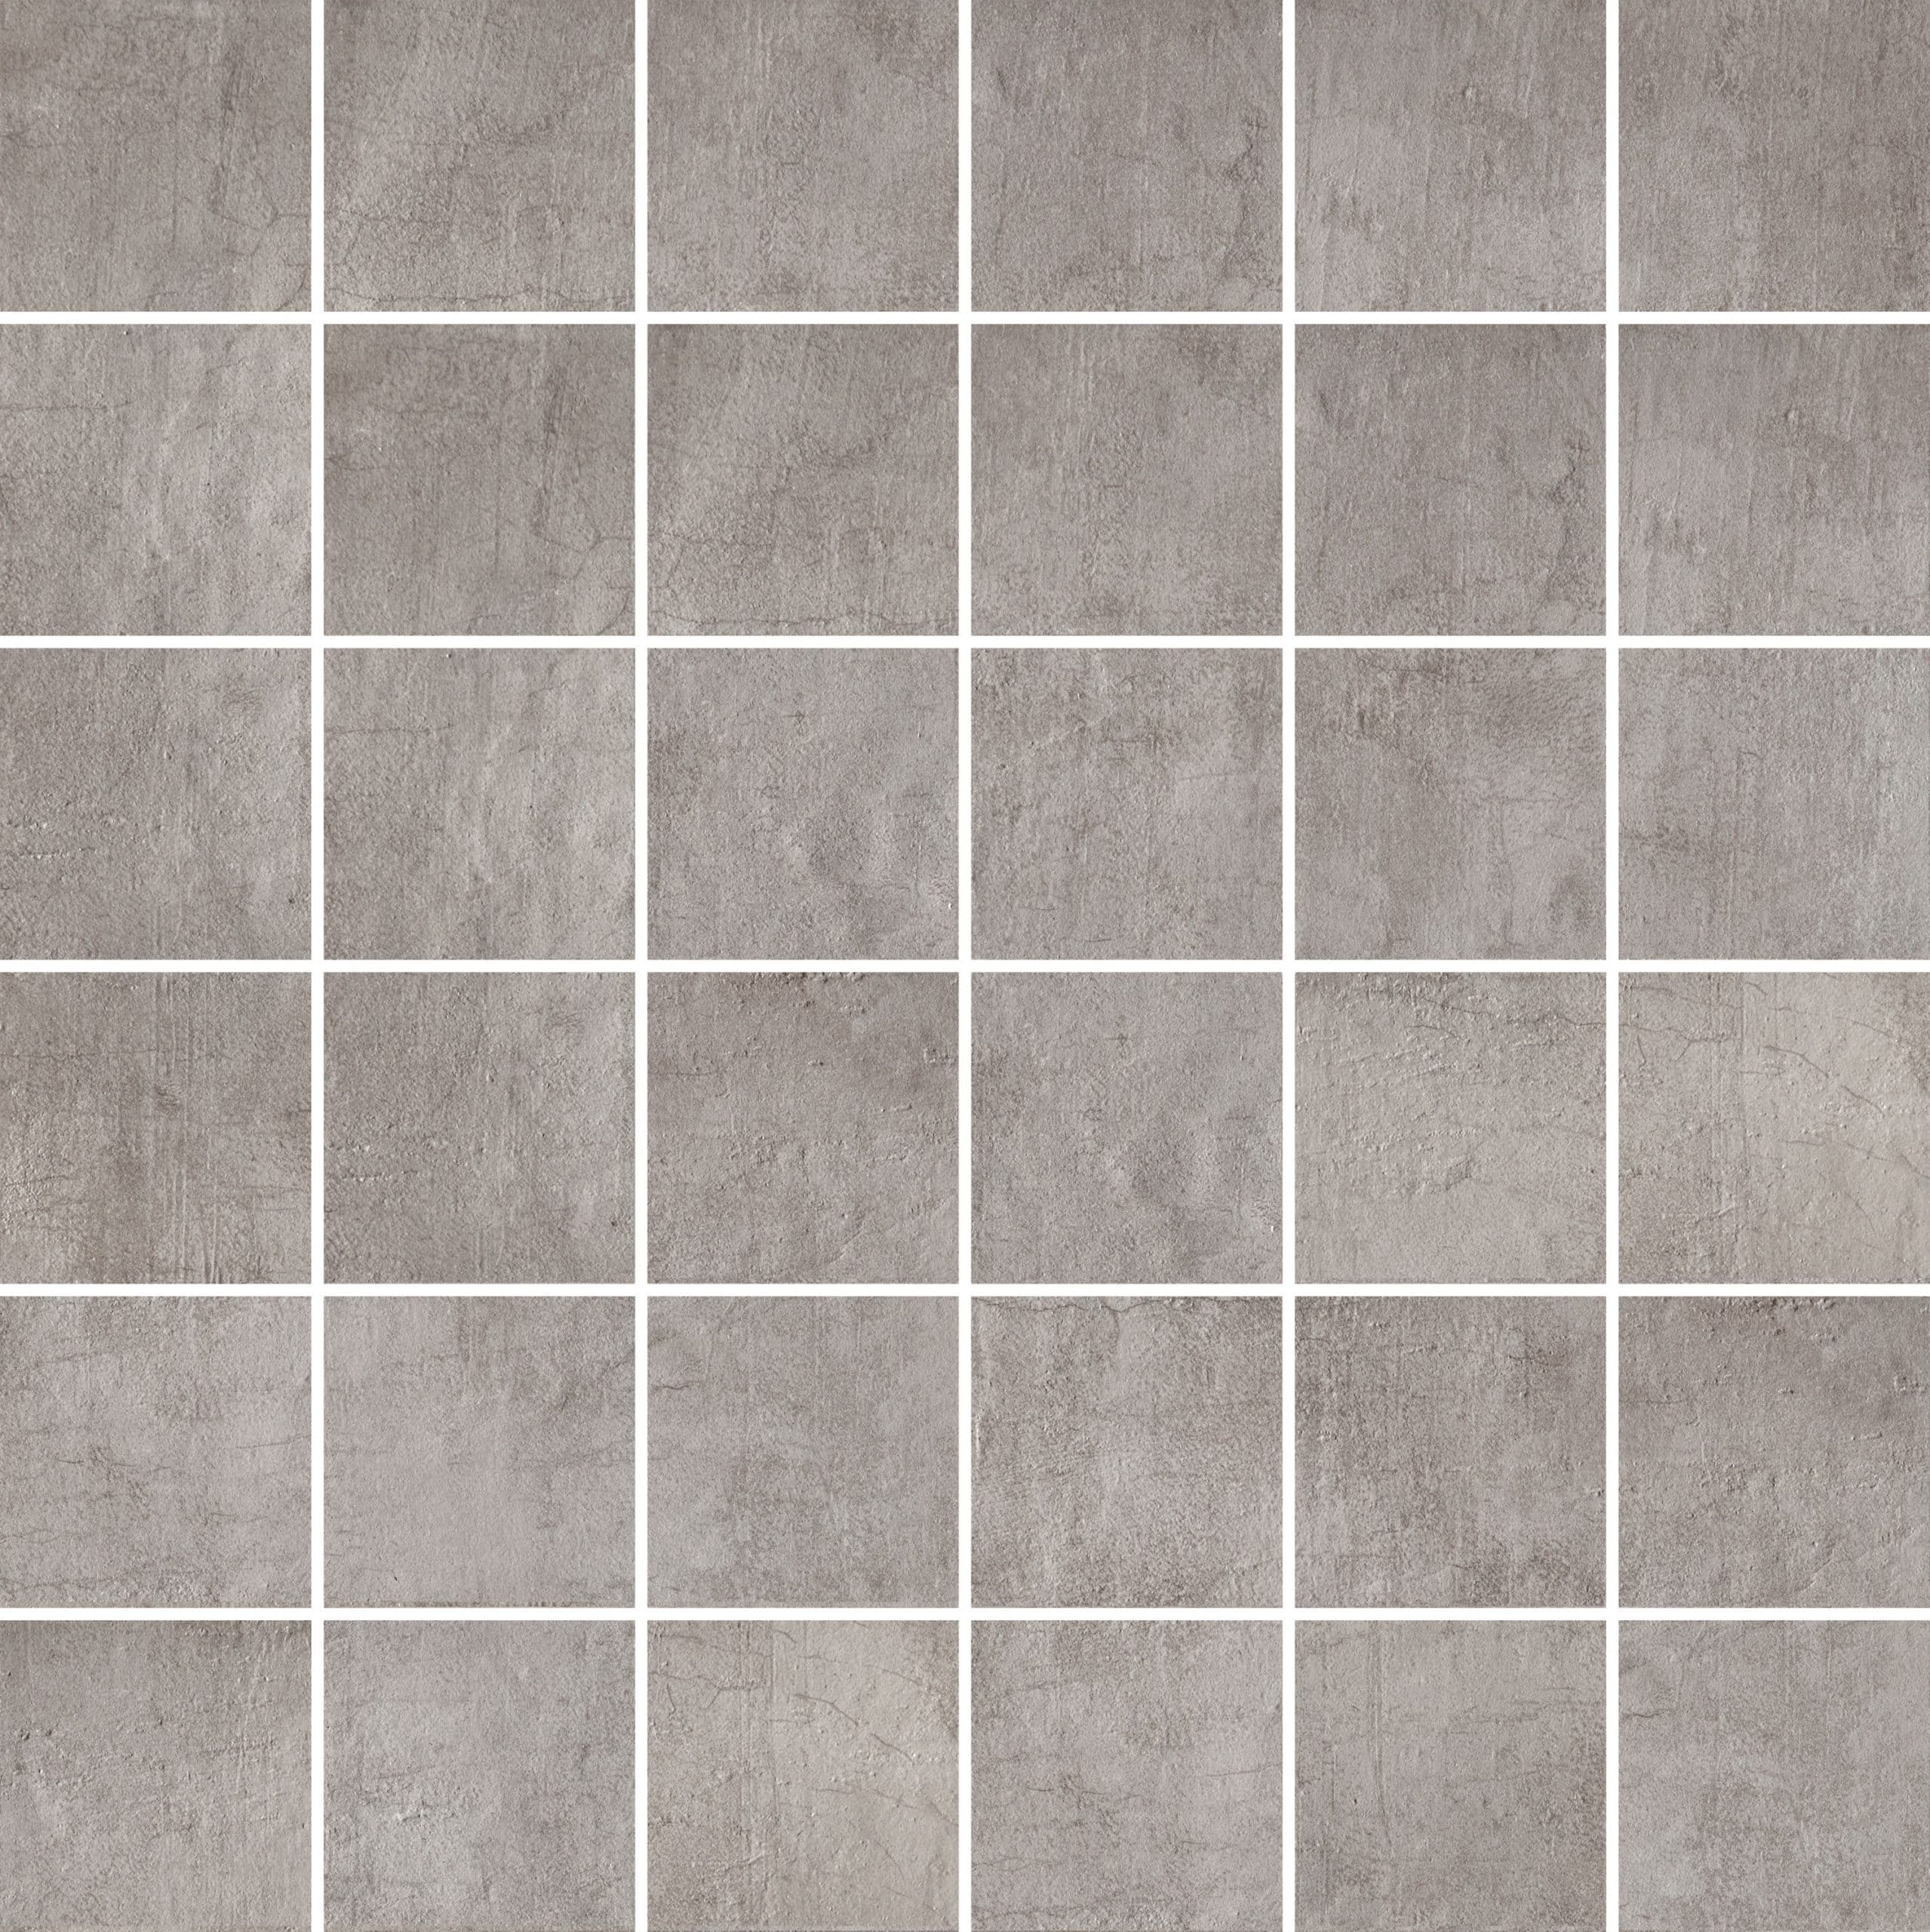 MK.CREACON-30G porcelain tile, showcasing a textured grey pattern, ideal for modern interior design.